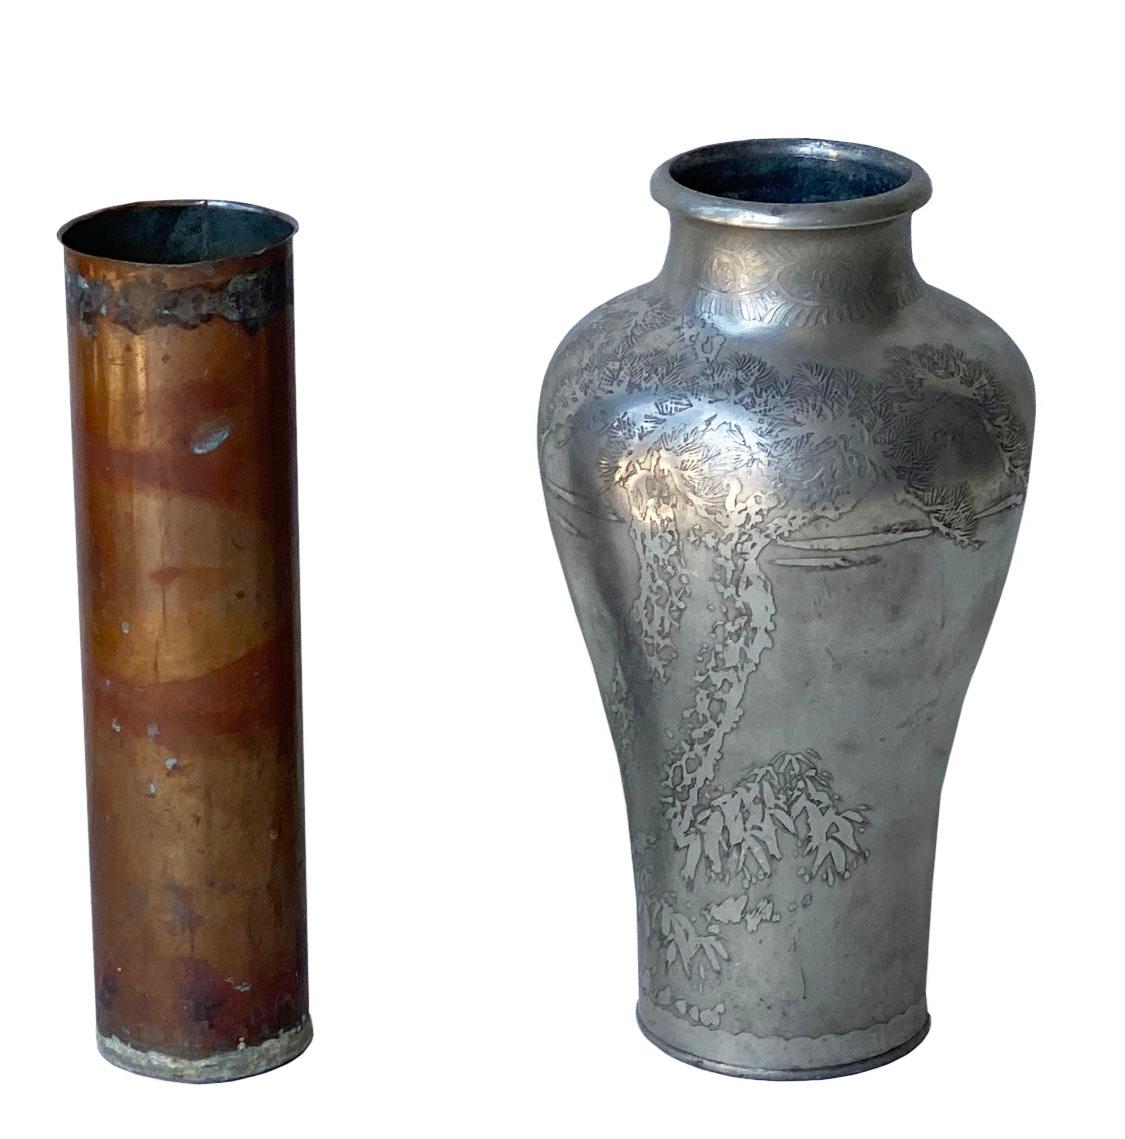 A 19th century Mori Yoko style Japanese vase with original copper liner.